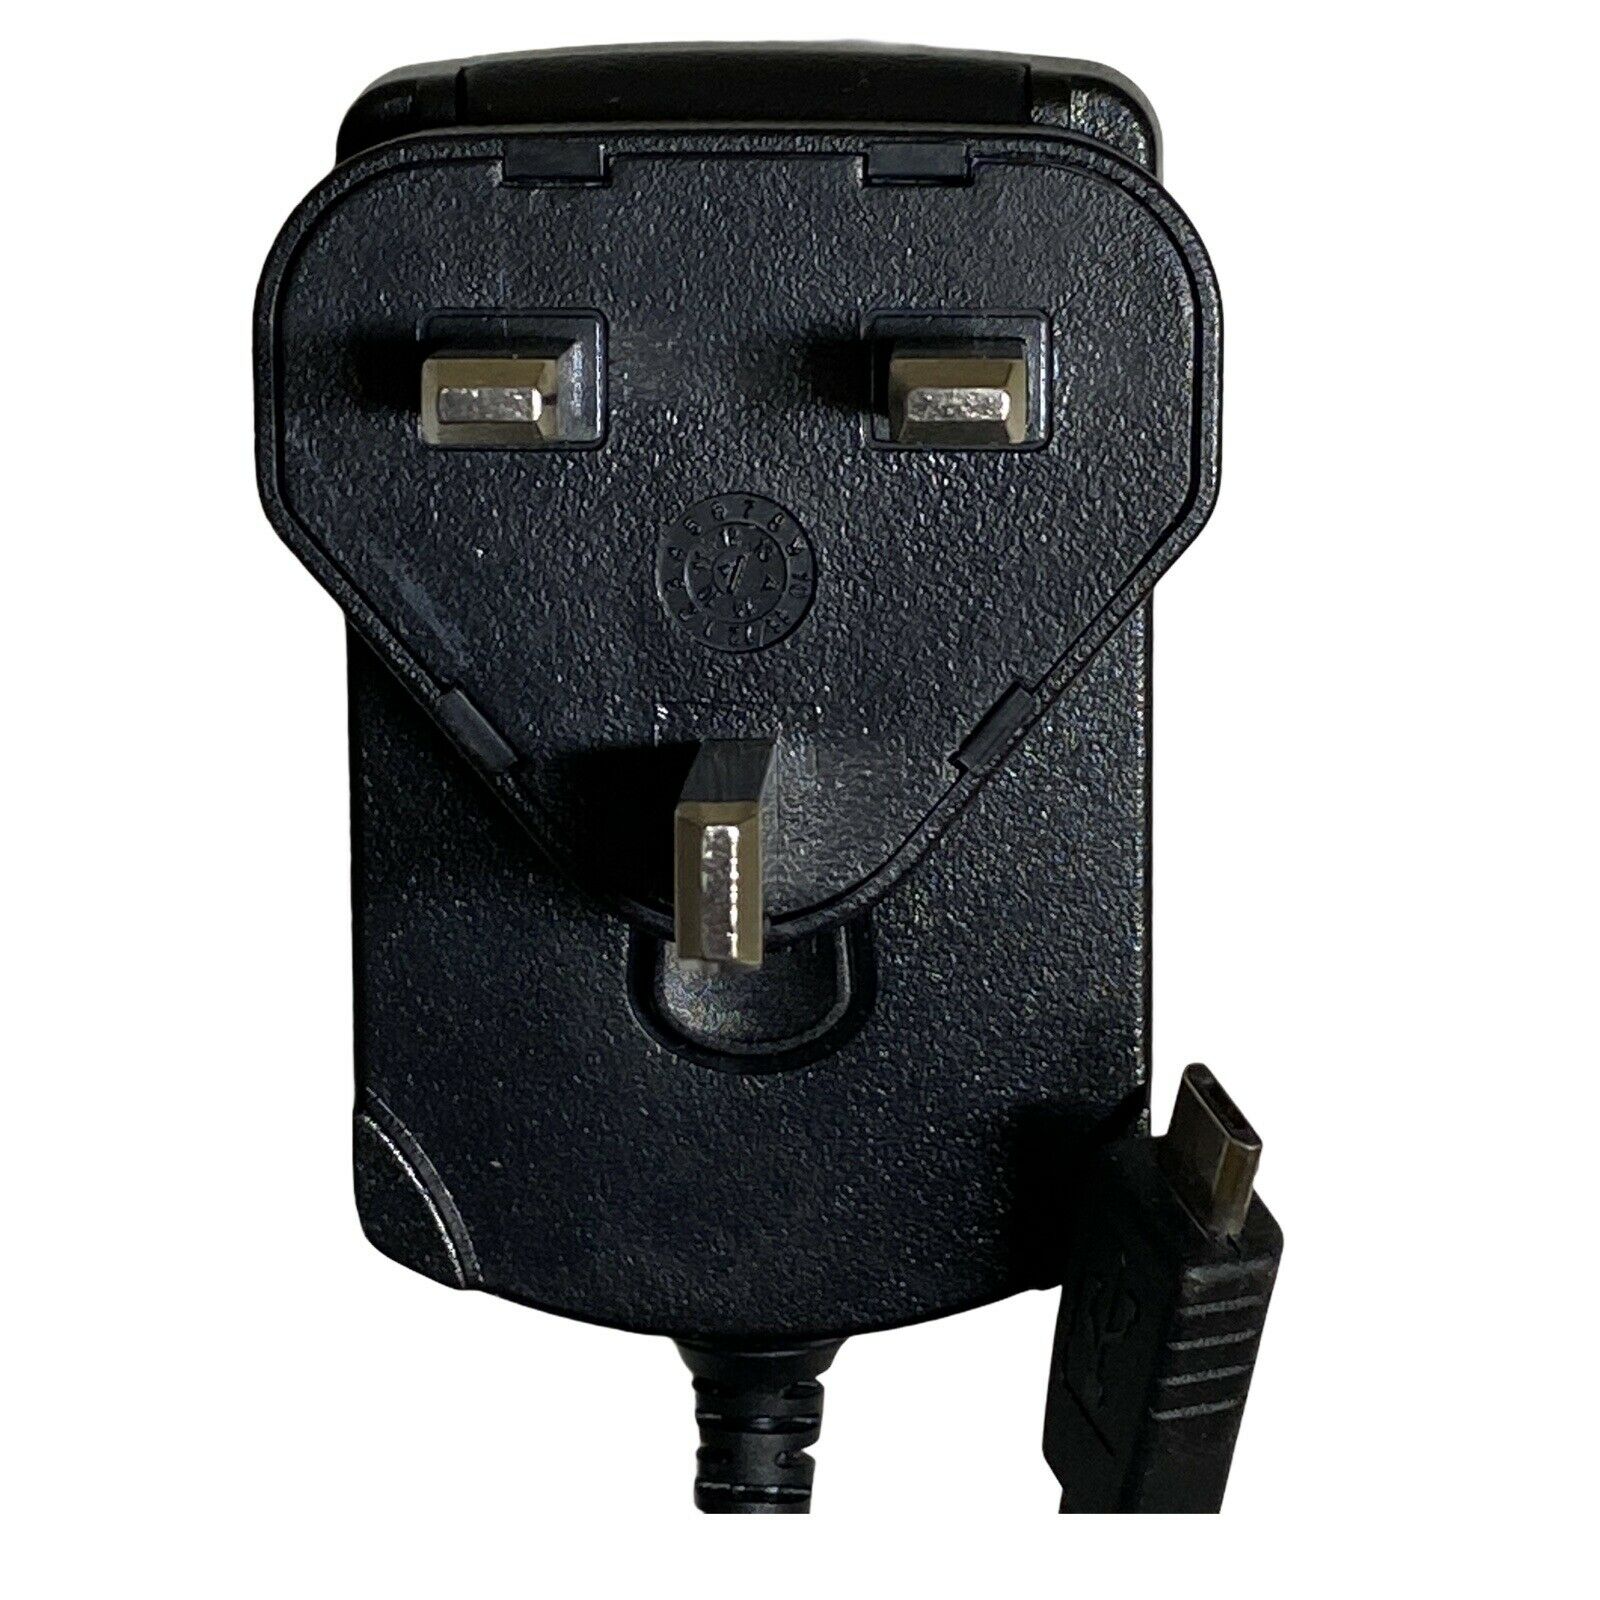 Genuine Kobo PSAC10R-050 Power Adapter UK Plug 5V 2A Brand: Kobo Compatible Brand: For Kobo Type: Power Adapter Un